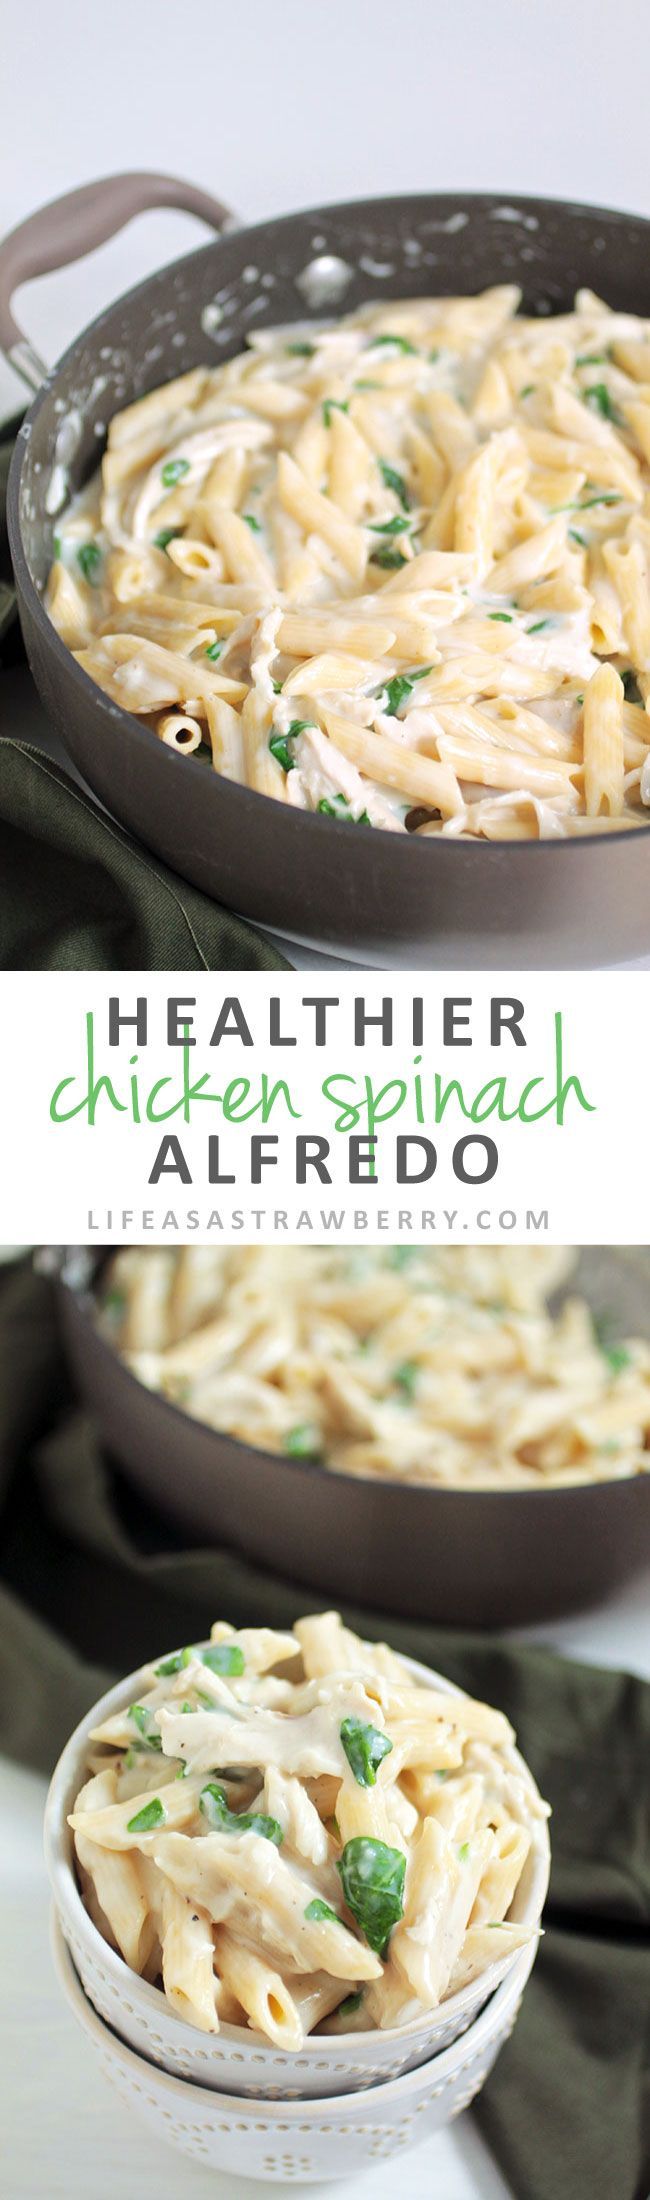 Healthier Chicken Spinach Alfredo | Lighten up a classic Fettuccine Alfredo recipe with this easy pasta recipe! Ready in 30